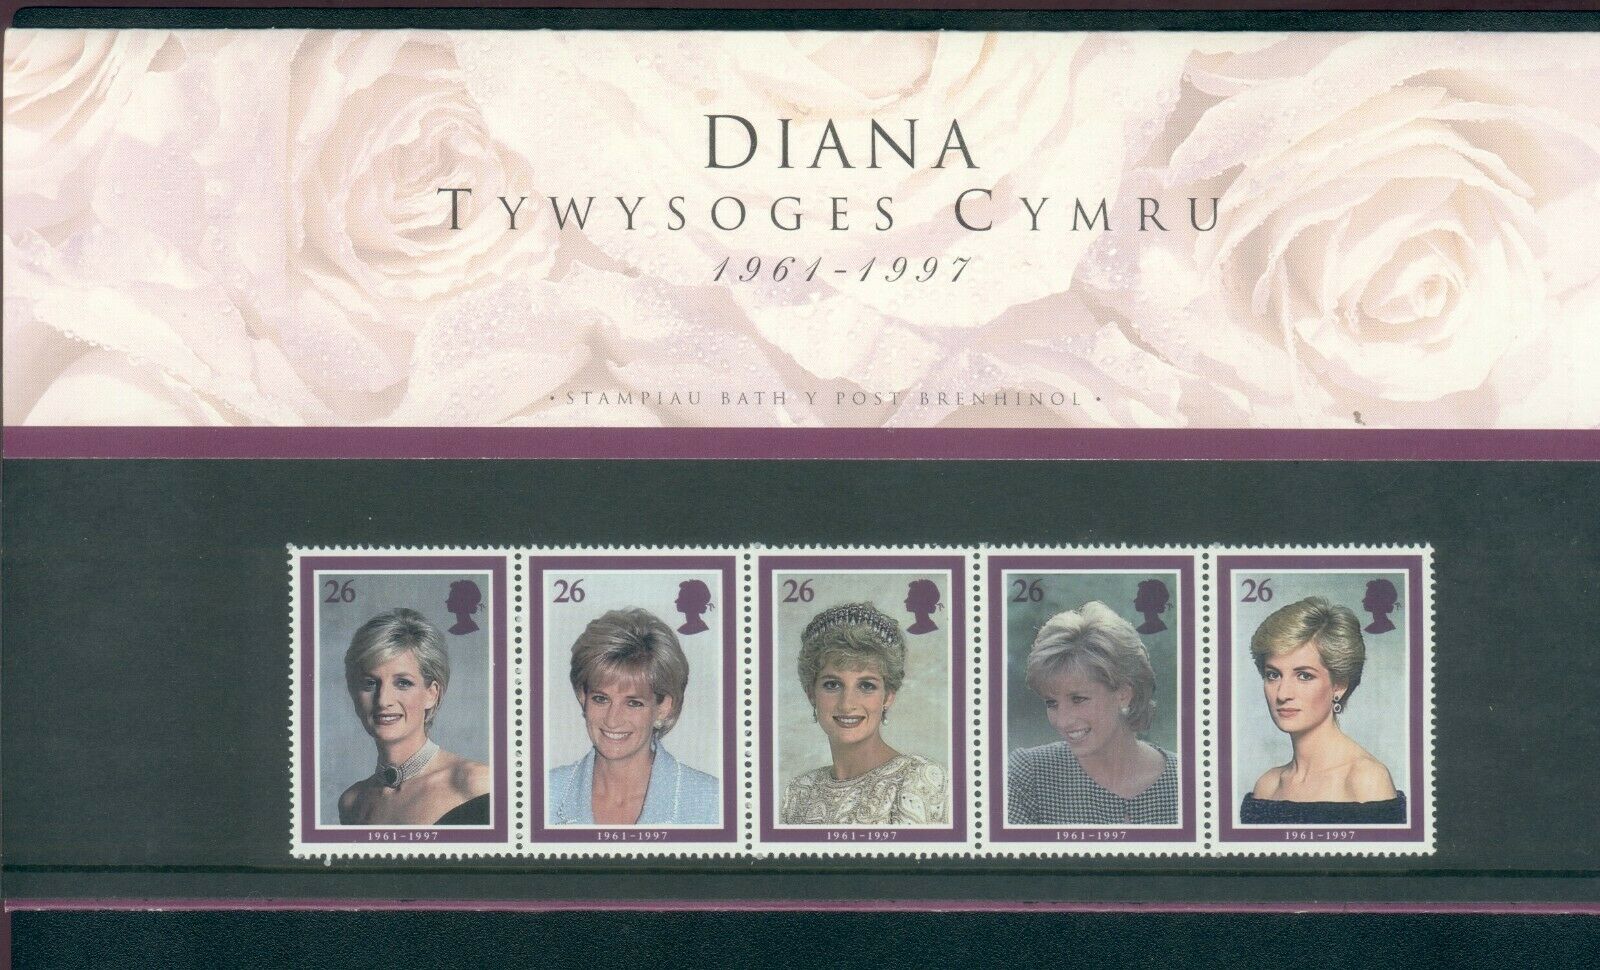 Gb The Diana Princess Of Wales Presentation Pack (welsh Version) Superb!